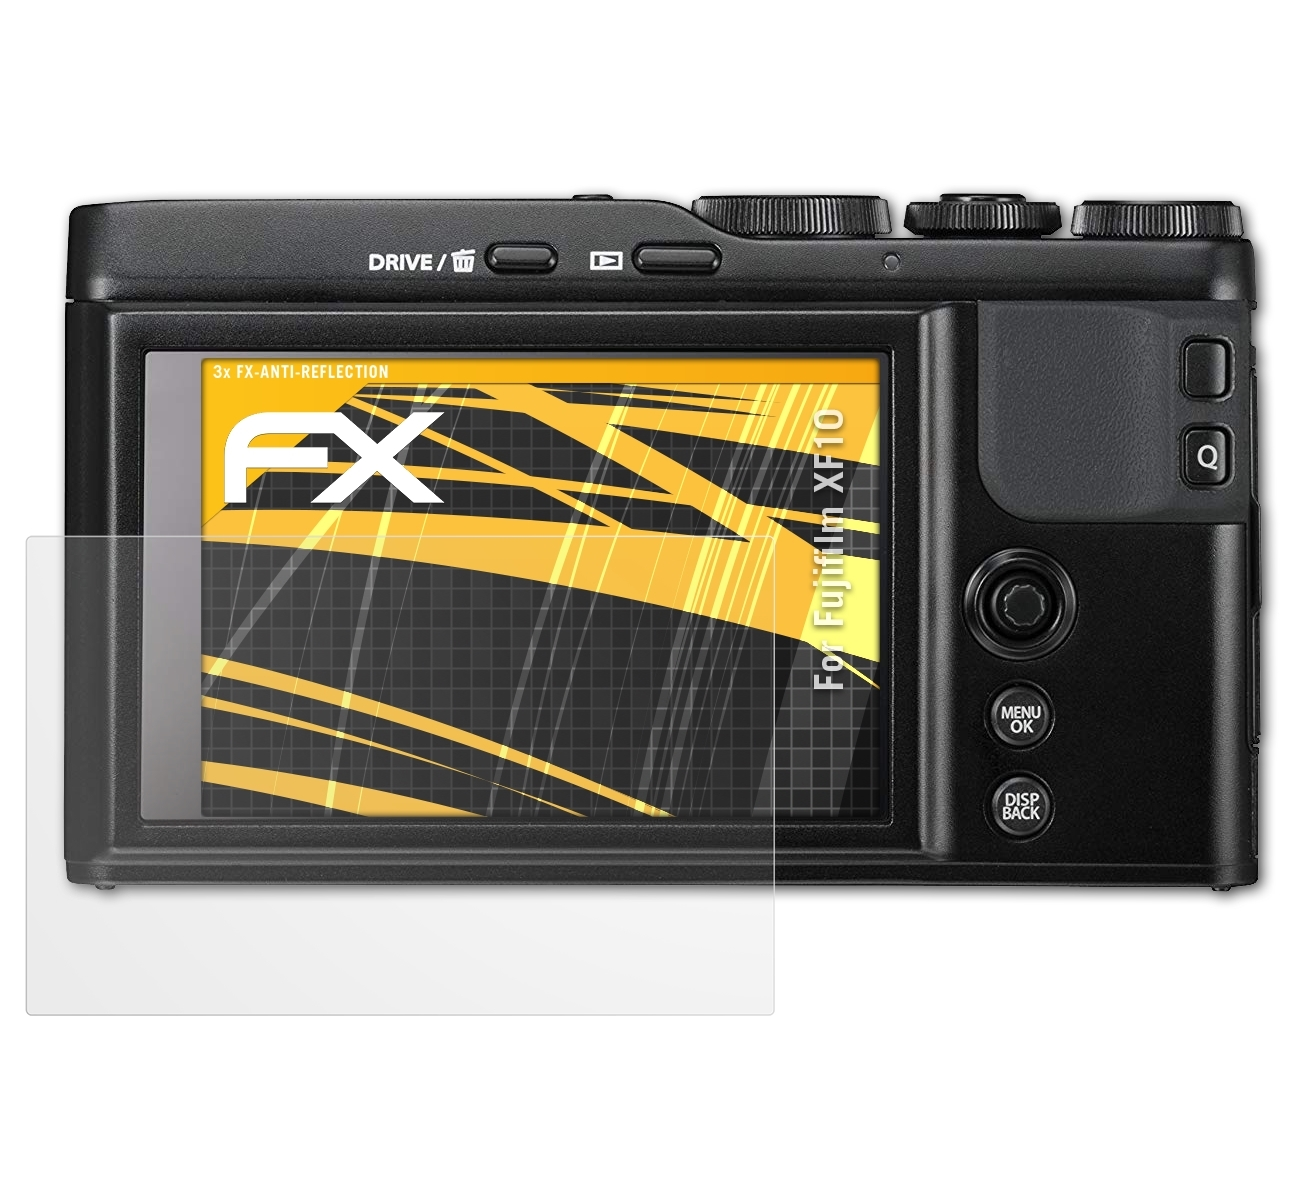 XF10) Fujifilm ATFOLIX FX-Antireflex 3x Displayschutz(für